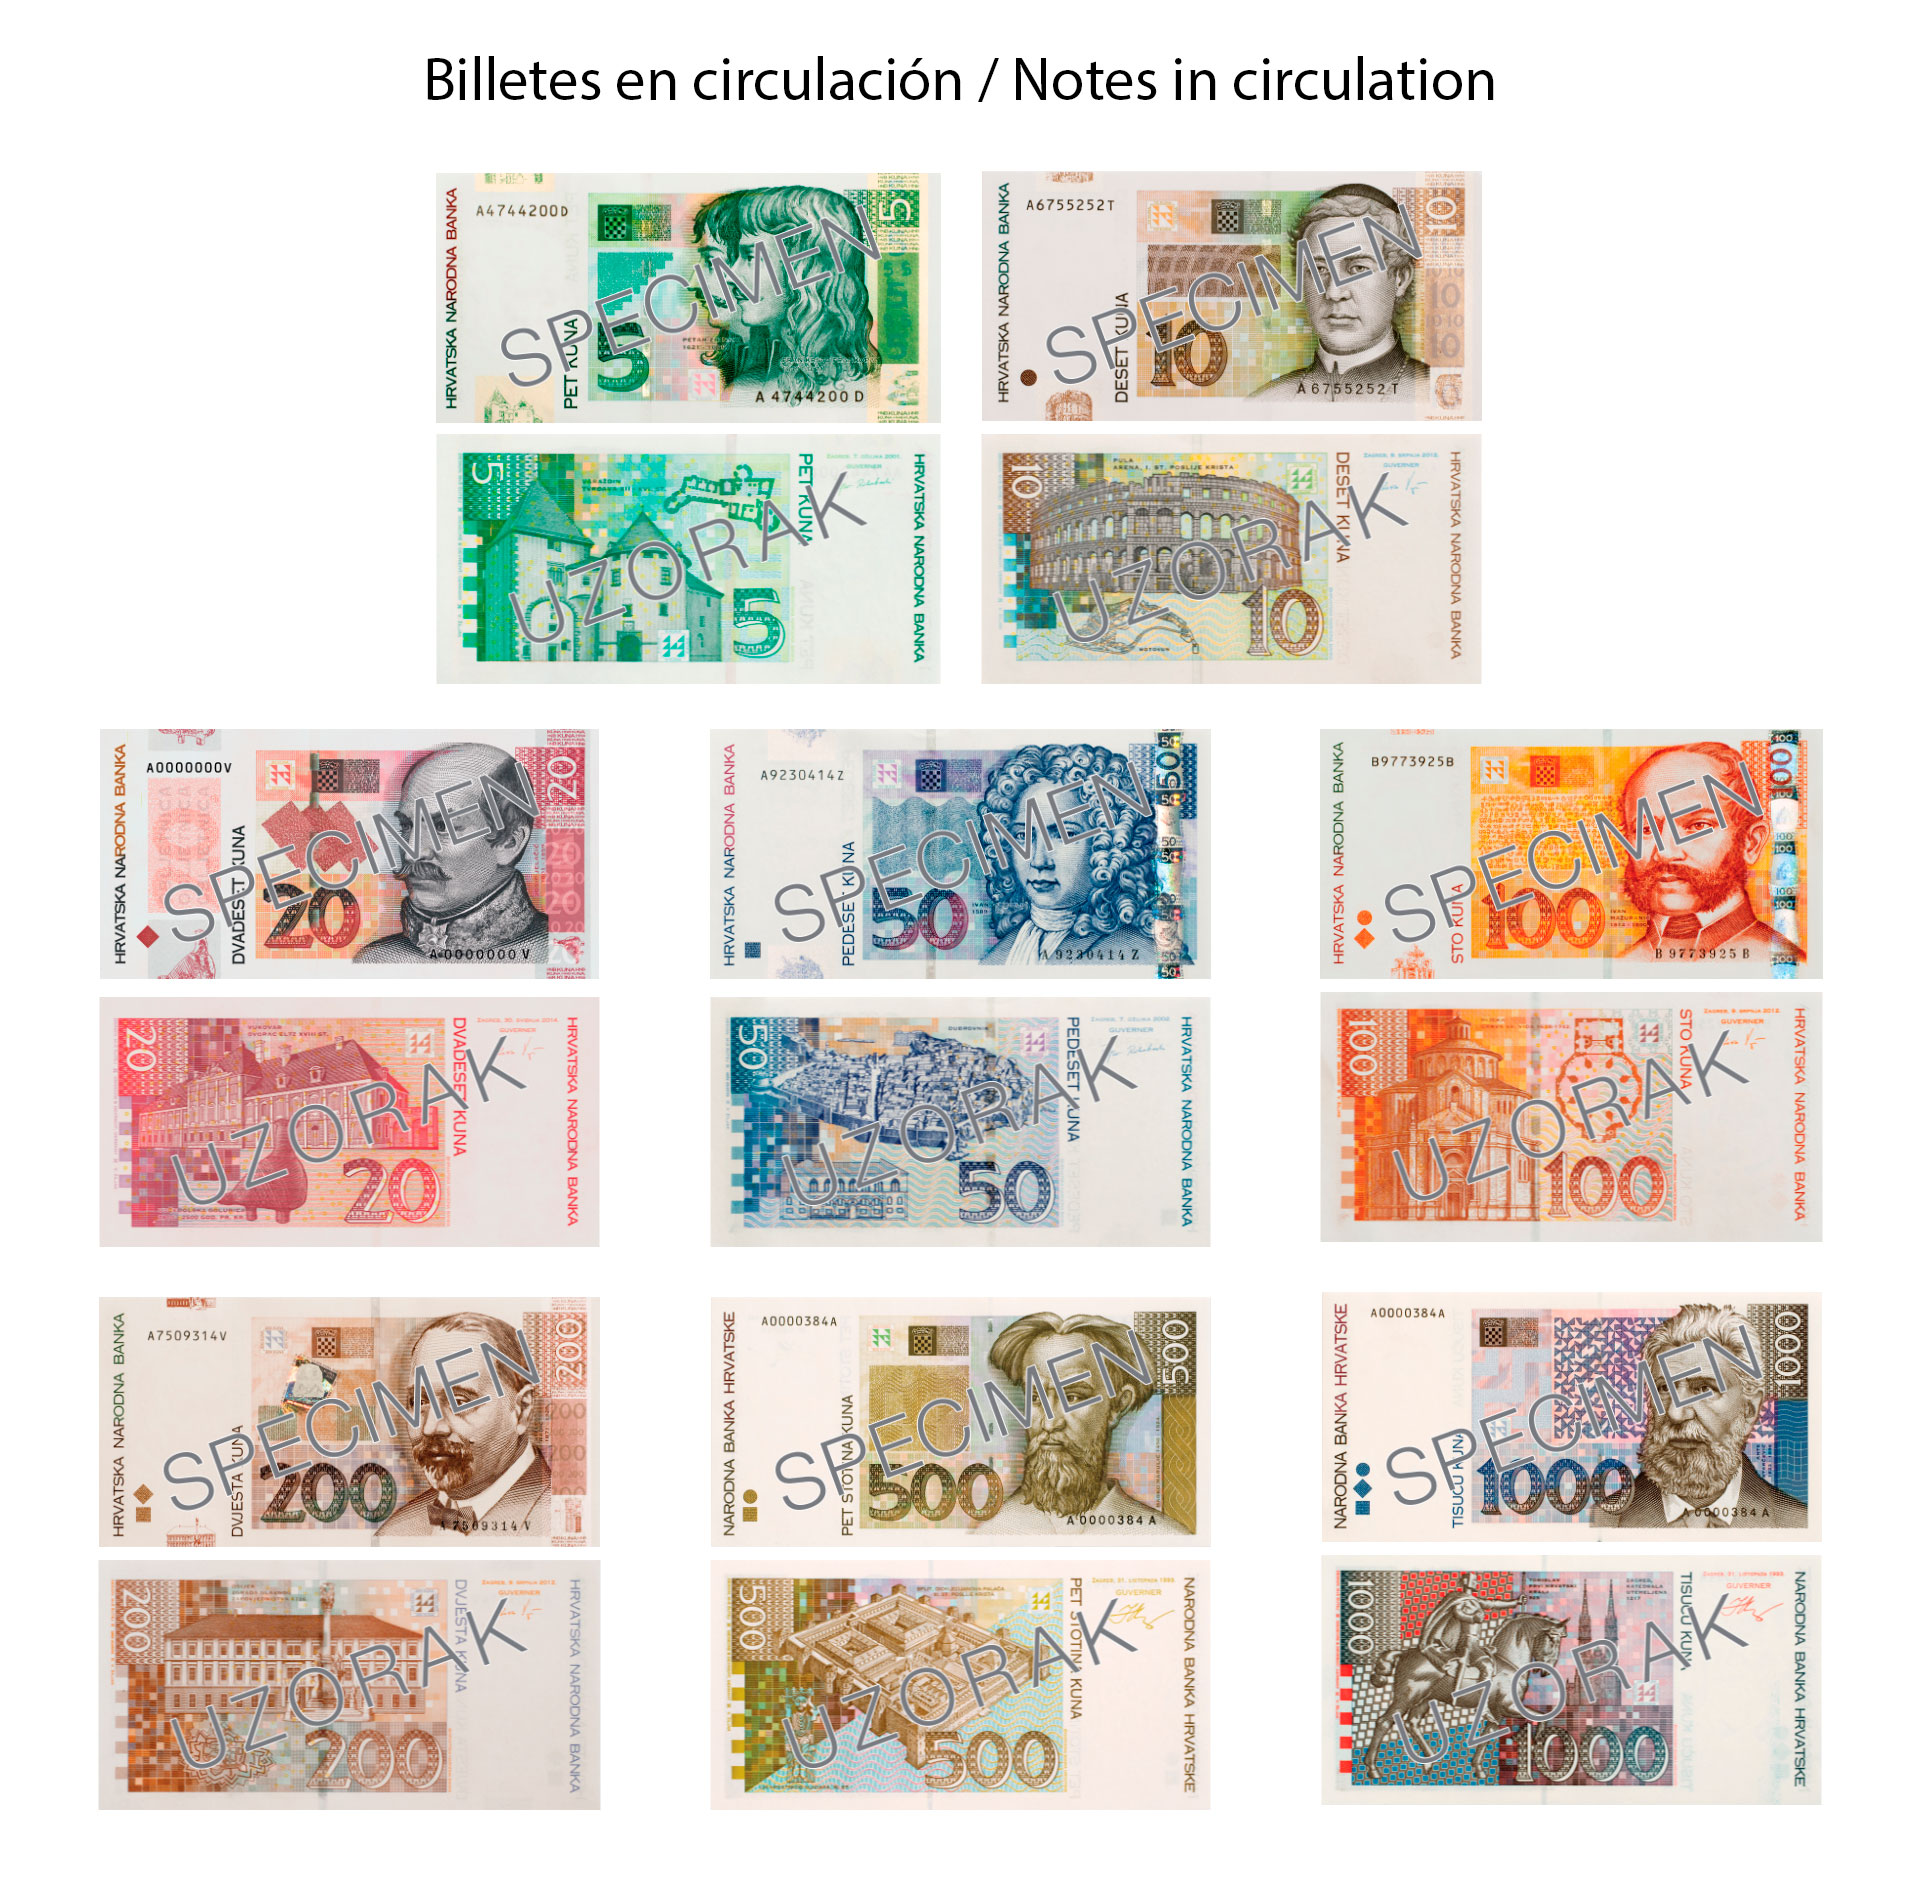 Convert 1 HRK to EUR - Croatian Kuna to Euro Currency Converter